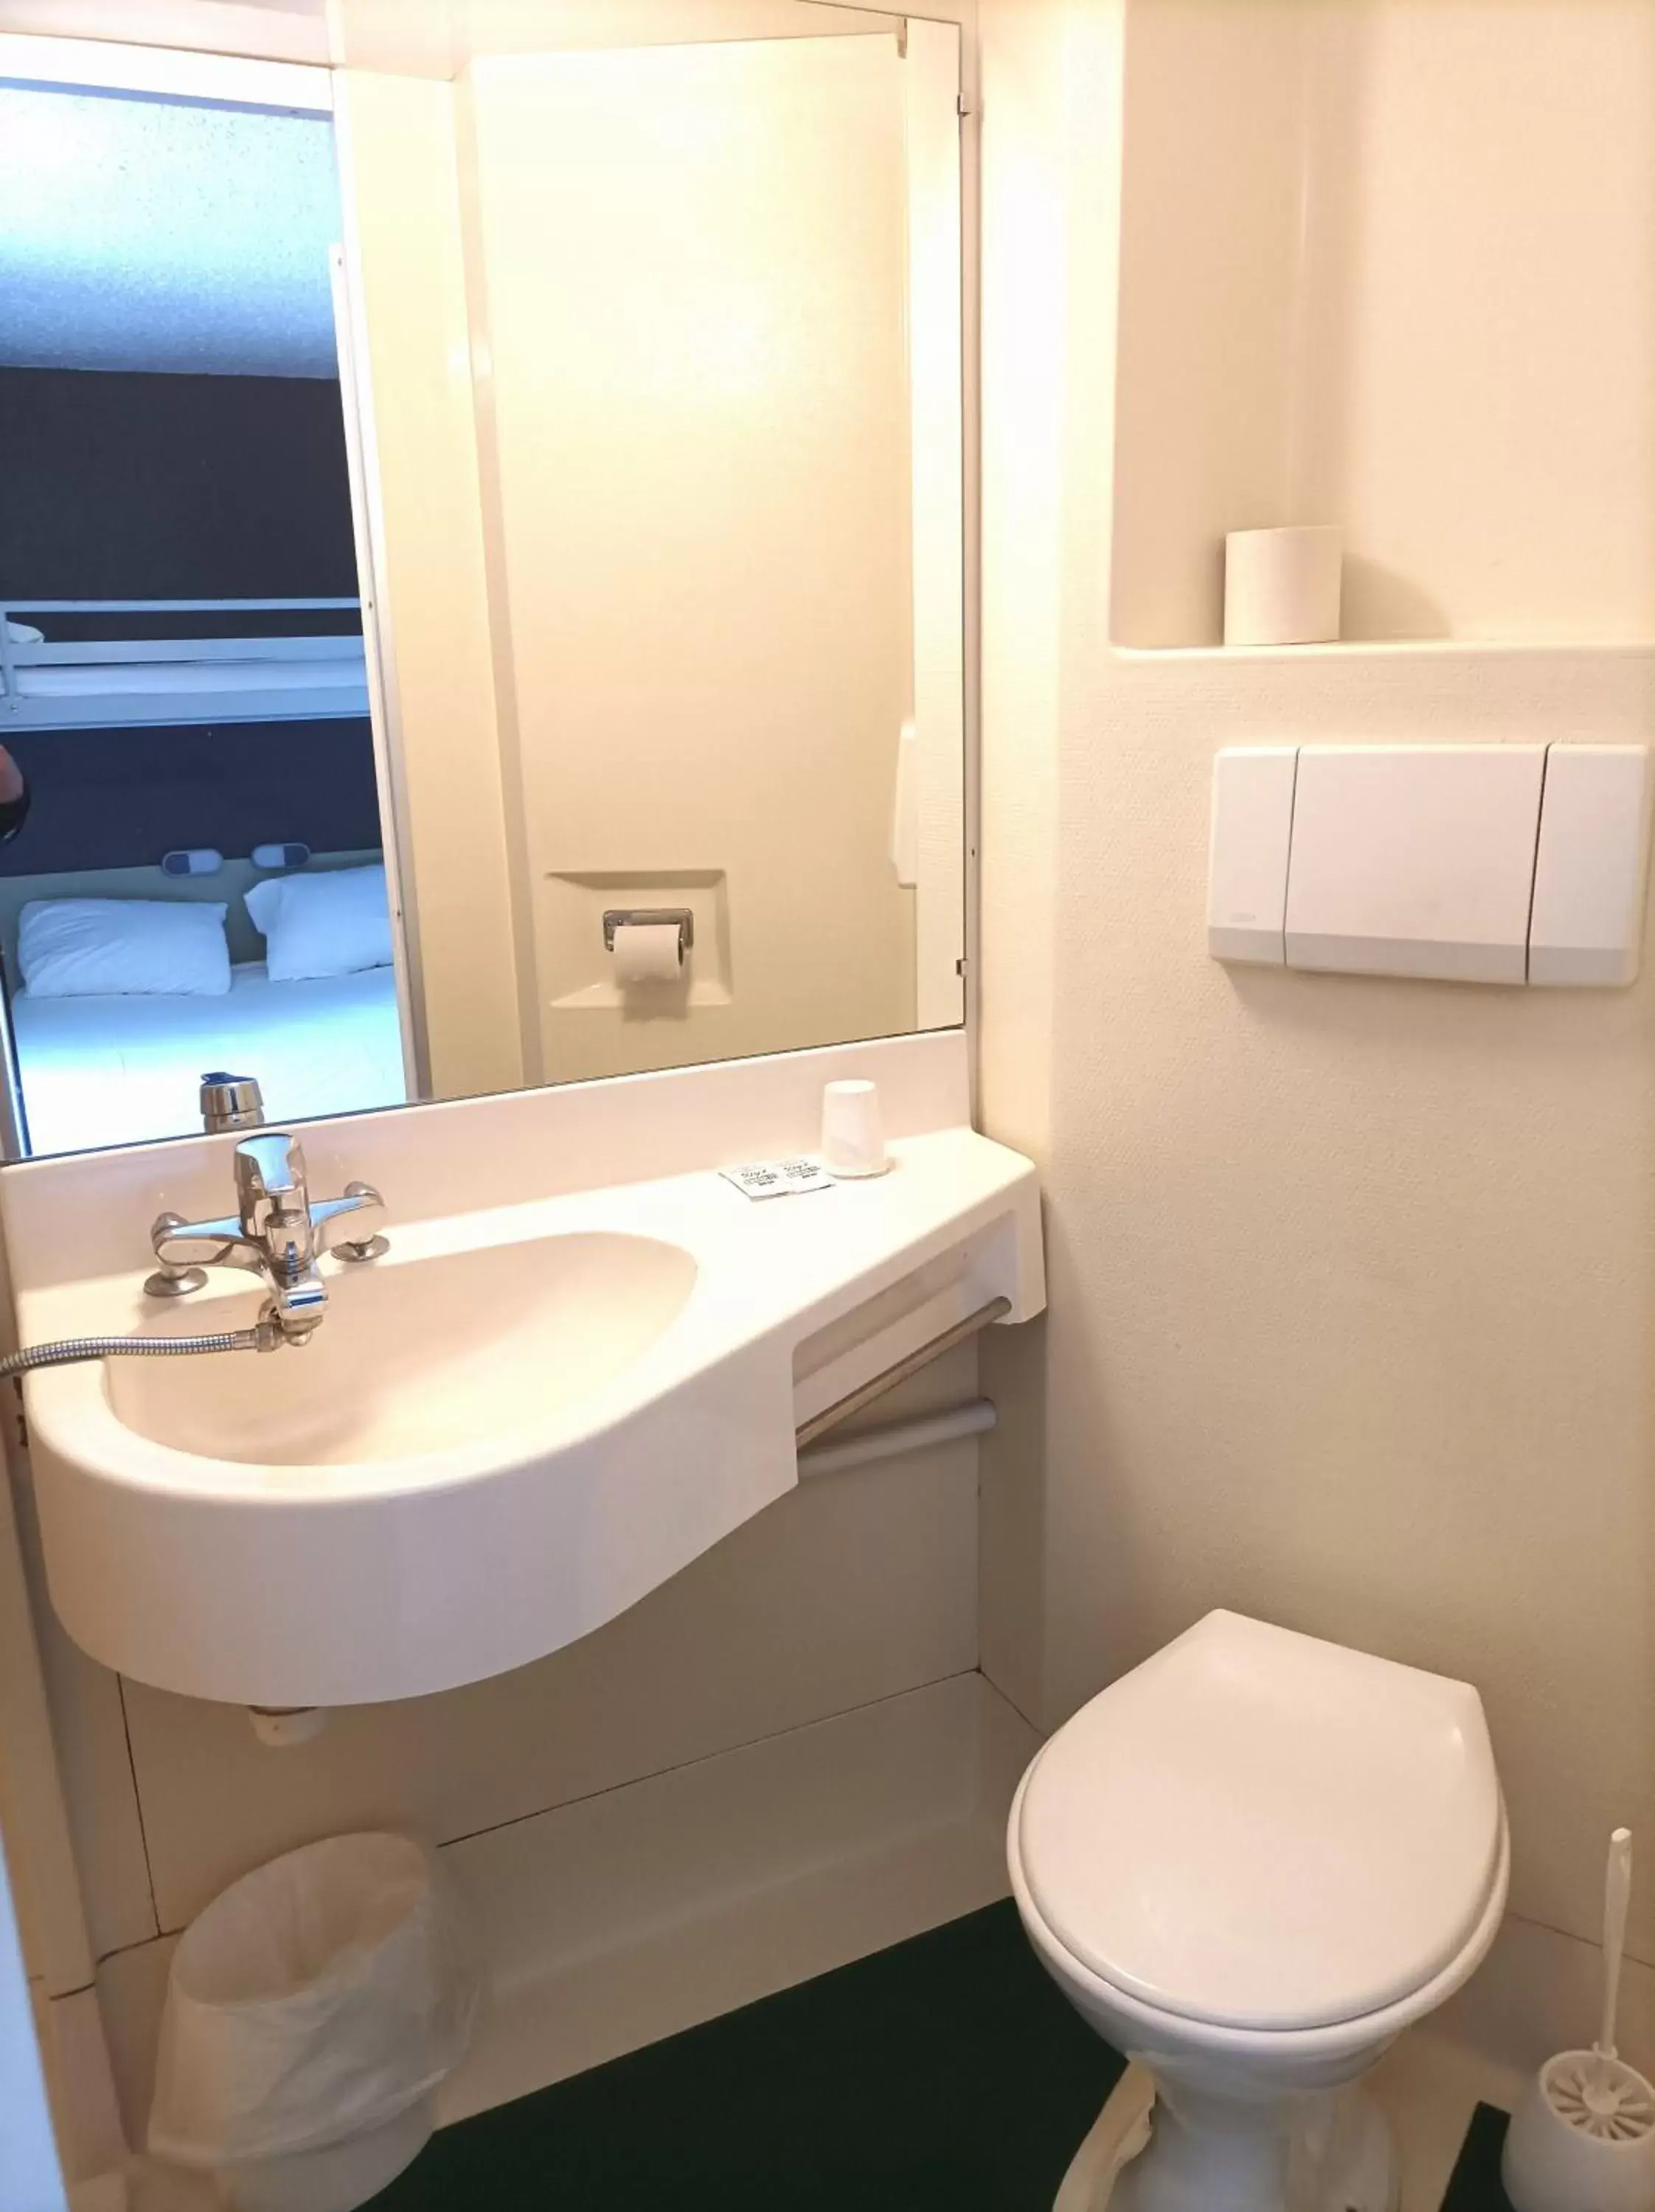 Toilet, Bathroom in Cit'hotel Design Booking Evry Saint-Germain-lès-Corbeil Sénart